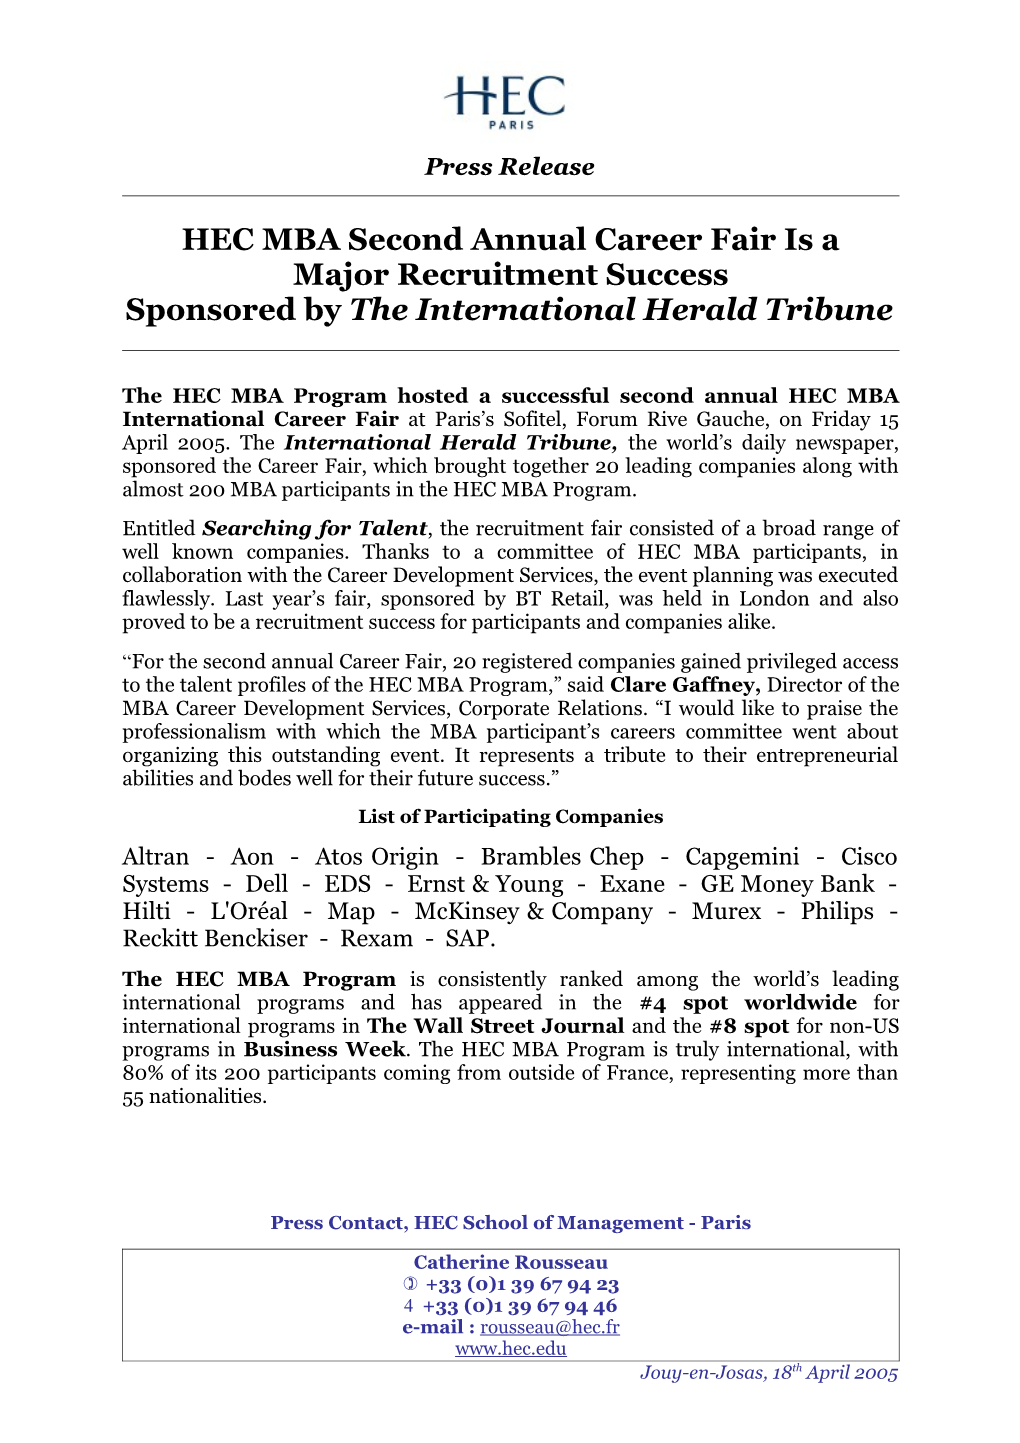 HEC MBA Second Annual Career Fair Is A